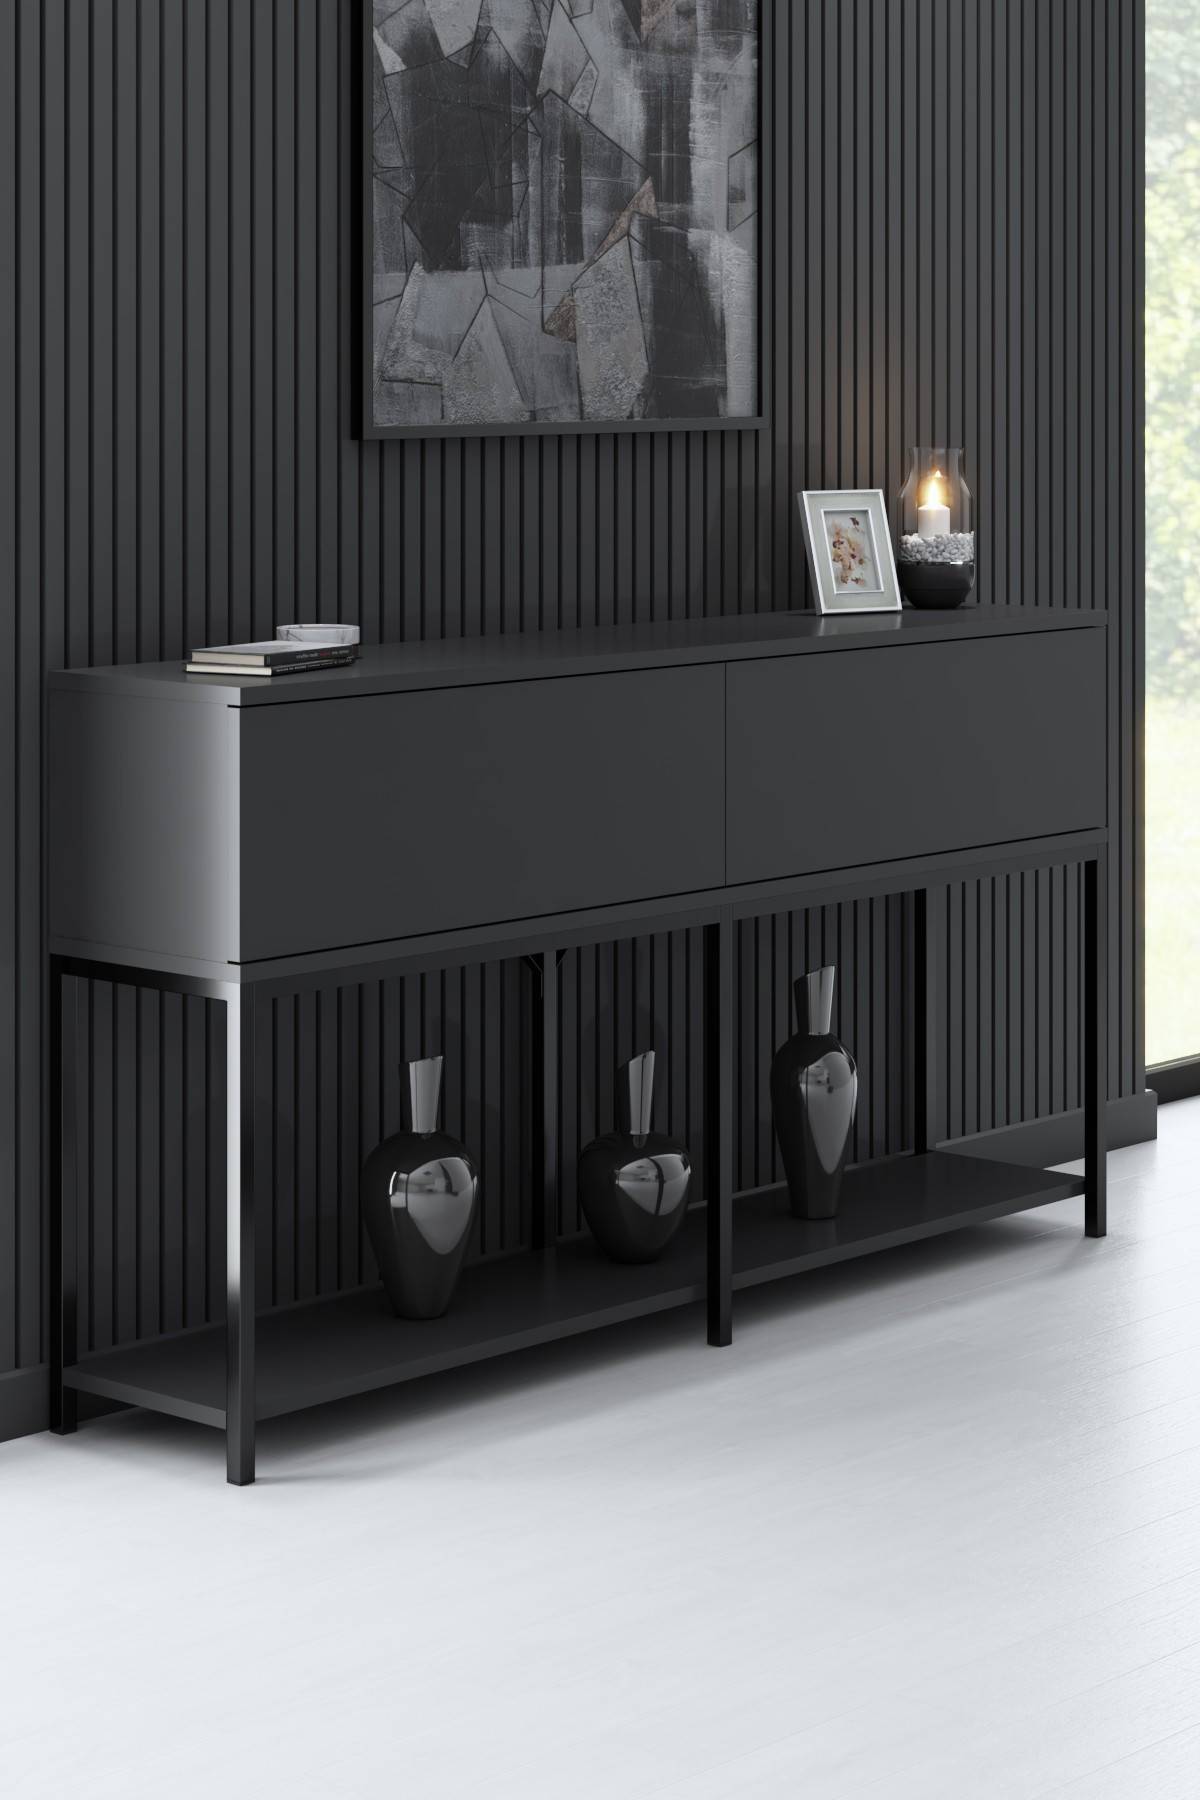 Nelly hedendaagse stijl console B150cm Antraciet hout en zwart metaal